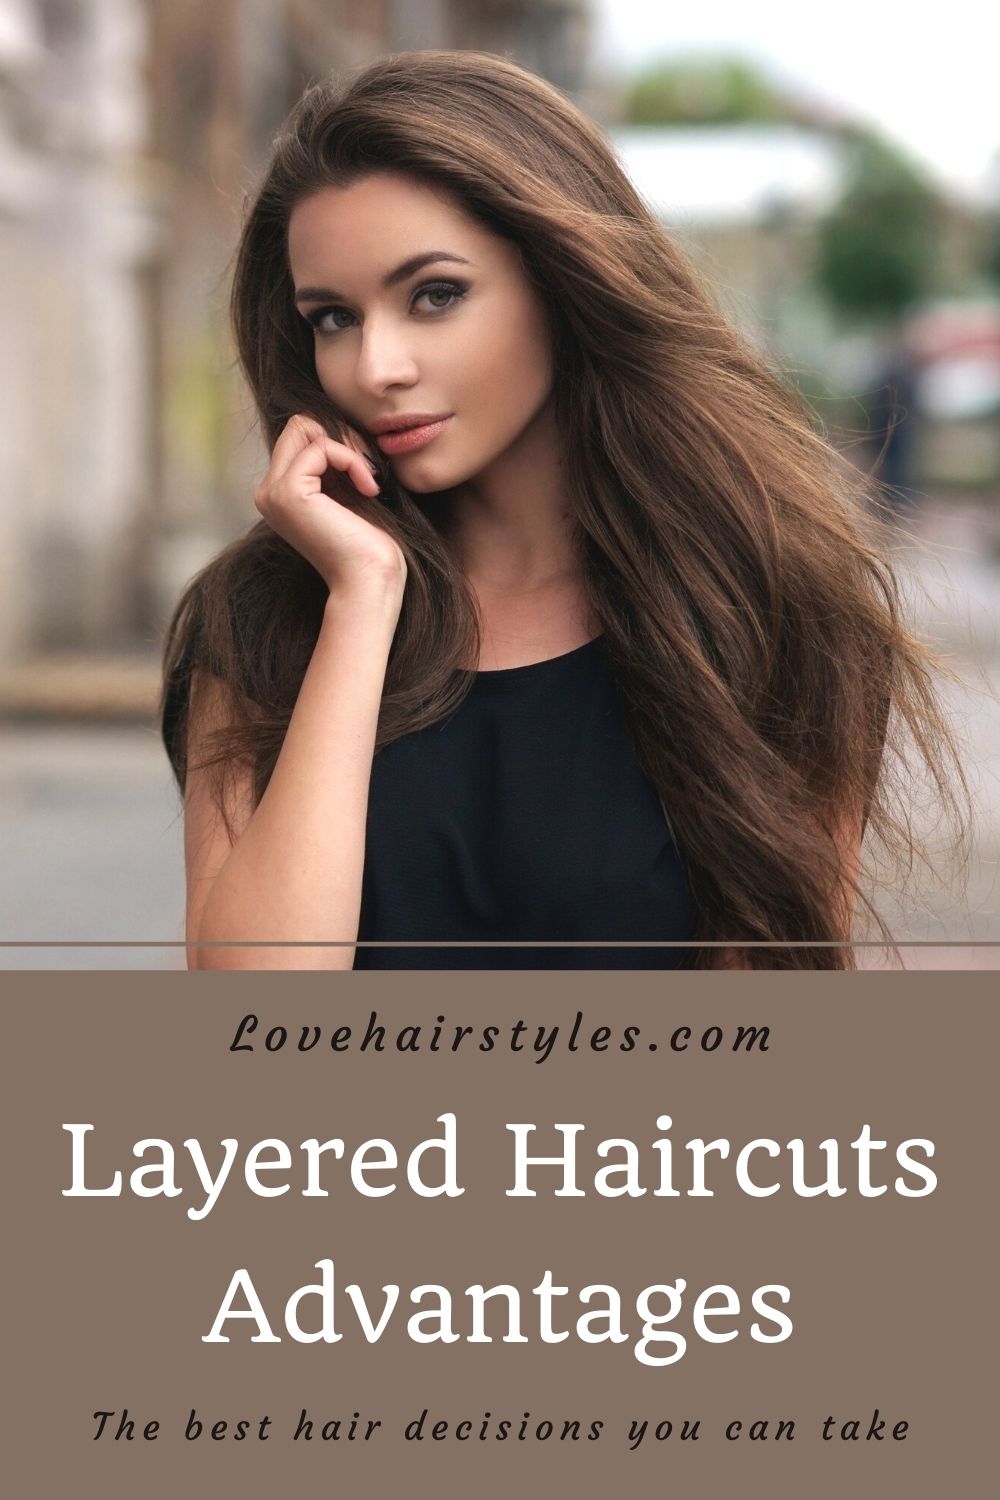 Advantages Of Layered Haircuts